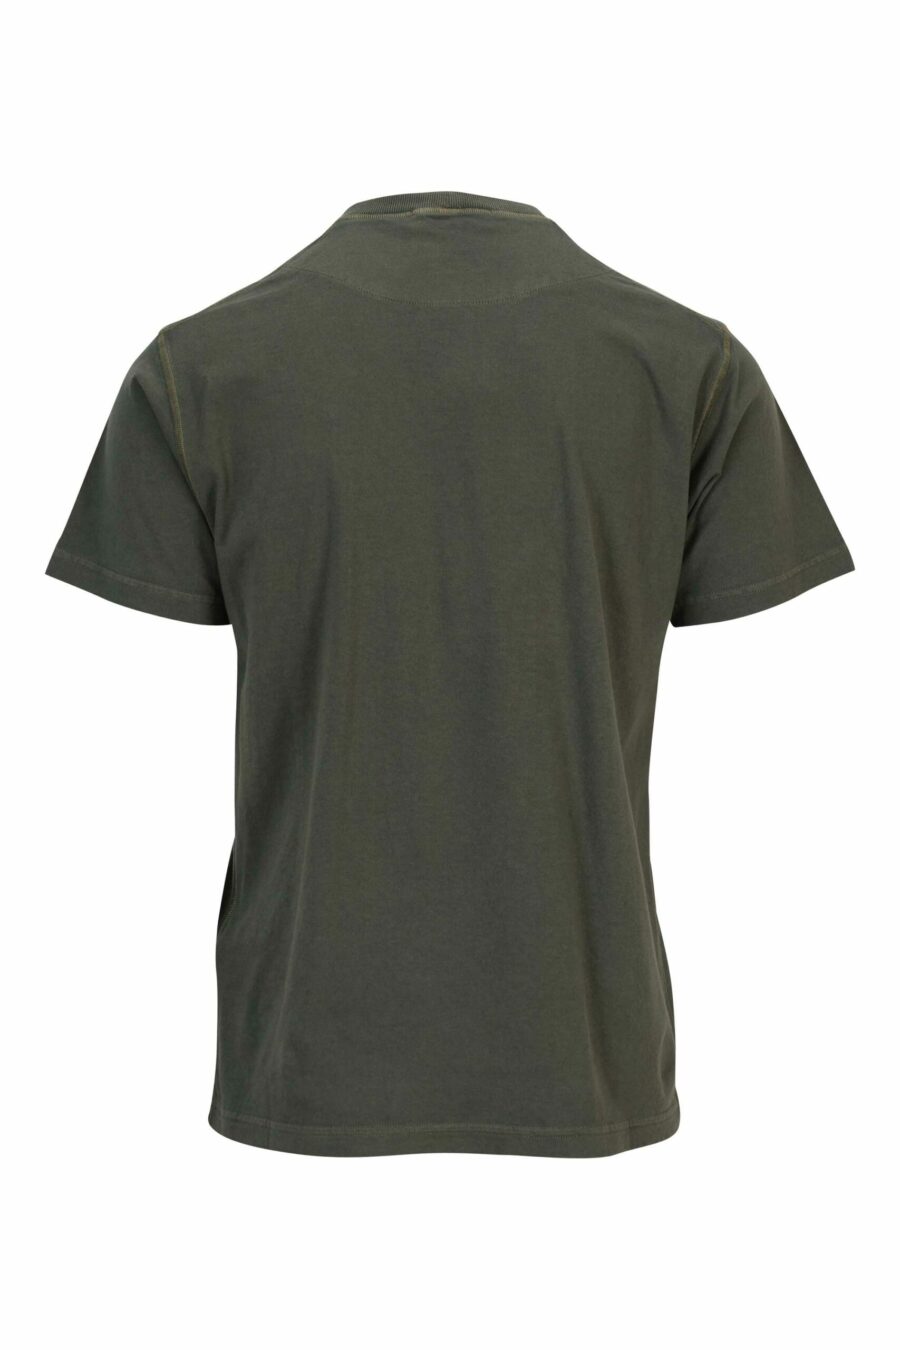 Camiseta verde militar con minilogo brújula - 8052572879333 1 scaled